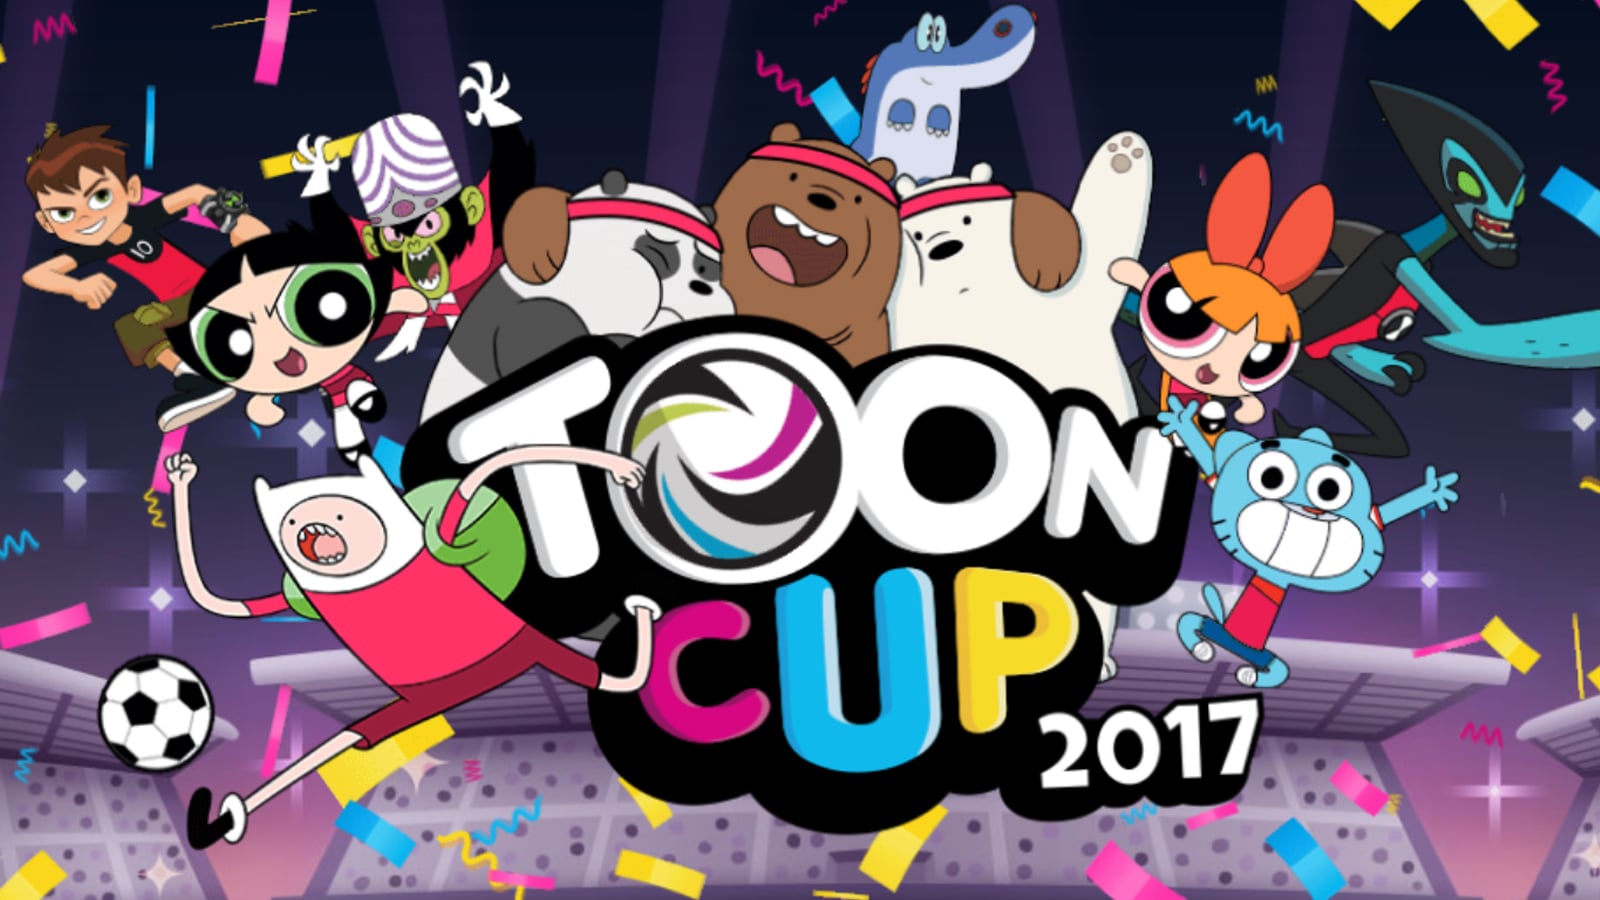 Toon Cup Football Games Cartoon Network